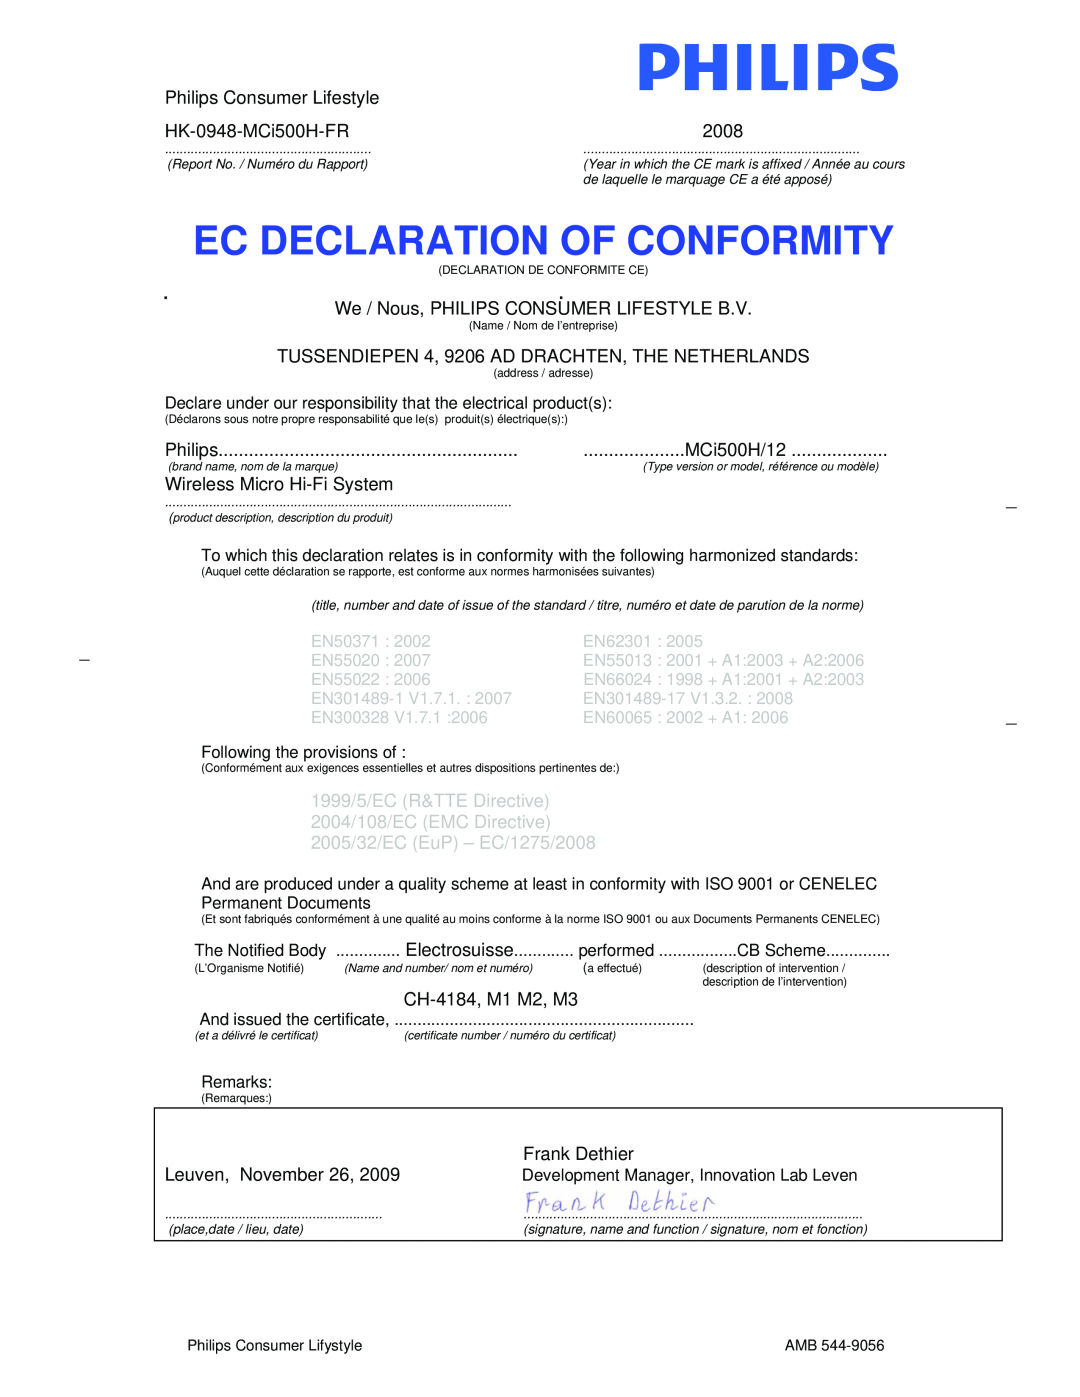 Philips MCi500H/12 Ec Declaration Of Conformity, Philips Consumer Lifestyle, HK-0948-MCi500H-FR, 2008, Leuven, November 